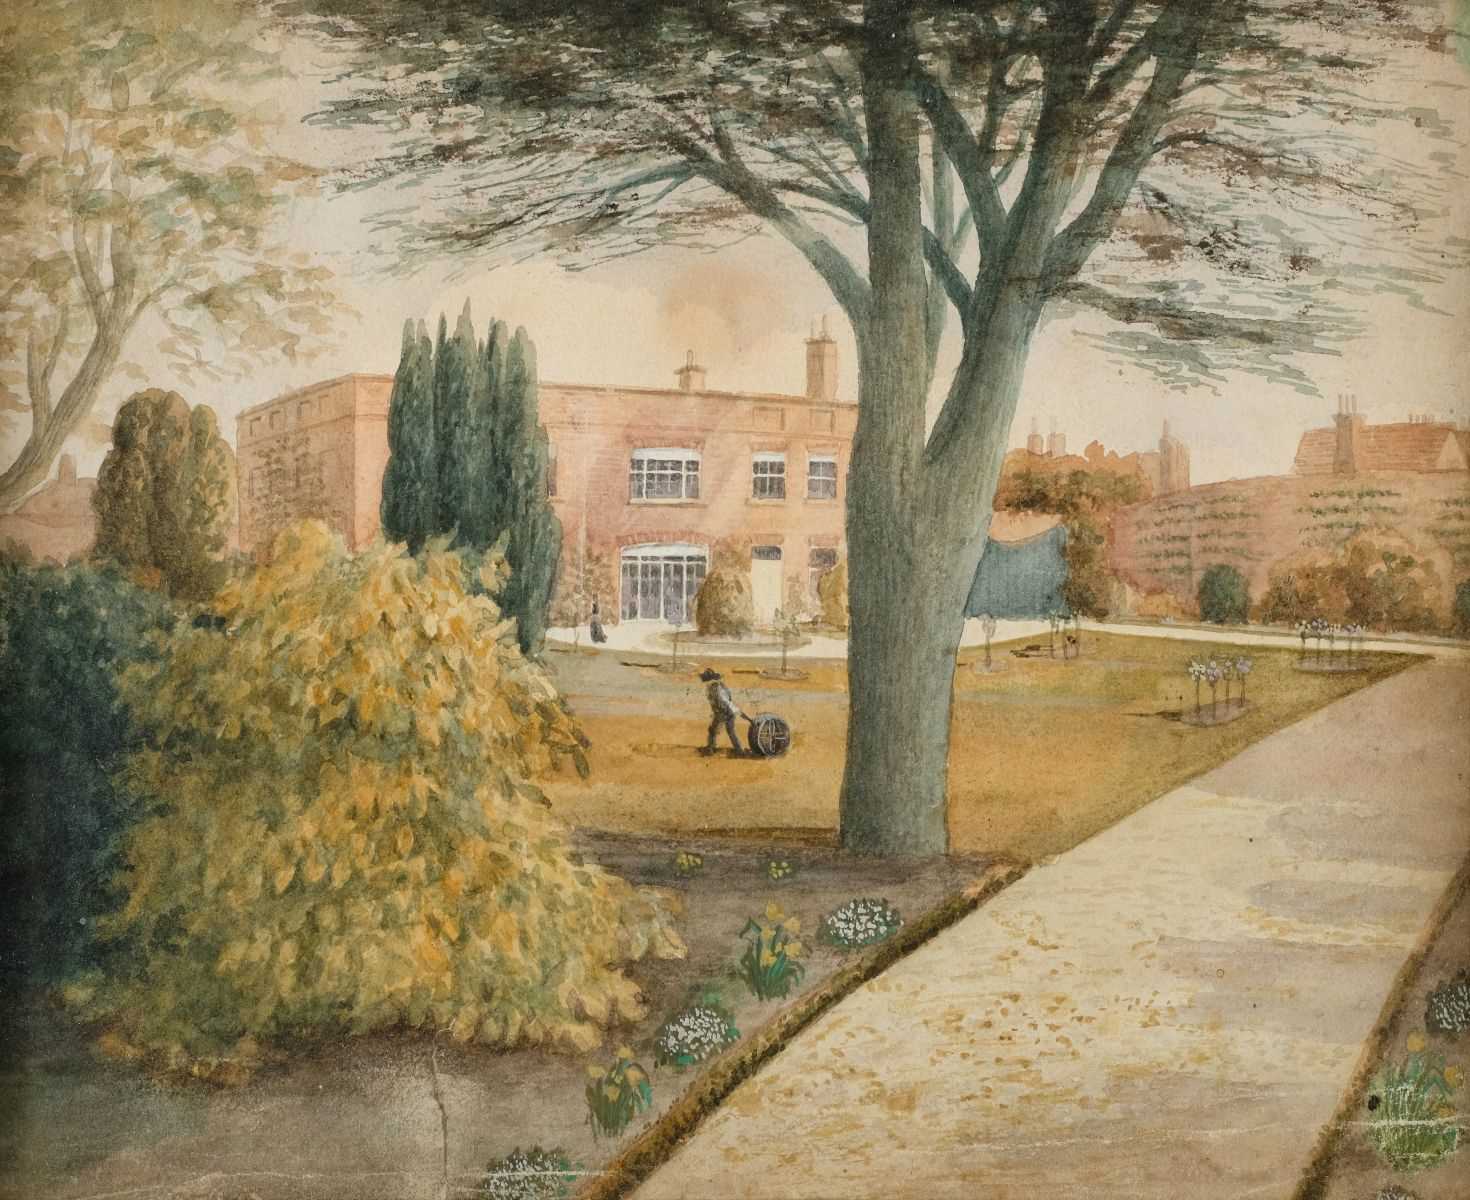 Lot 425 - Domestic Architecture. Harmondsworth Hall, near West Drayton, circa 1840s